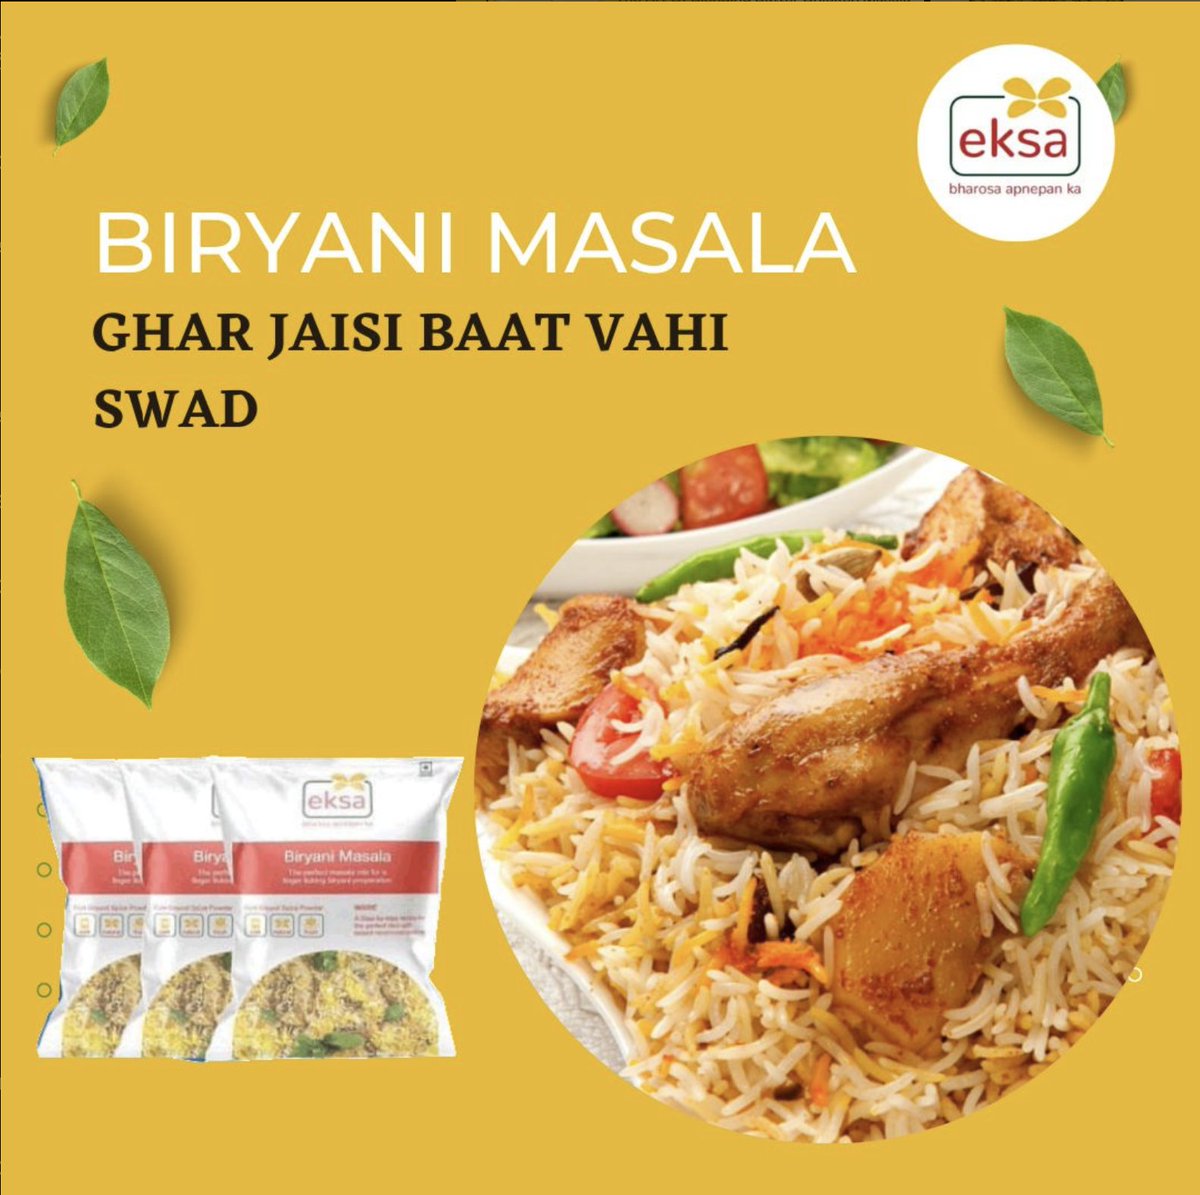 Transform your ordinary rice into a flavourful masterpiece with our Eksa Biryani Masala. 

#eksa #eksafoodproducts #eksamasala #bharosaapnepanka #spices #masala #spice #food #foodie #foodlover #deliciousfood #tasty #tastyfood #Biryani #biryanilovers #BiryaniChallenge #biryani